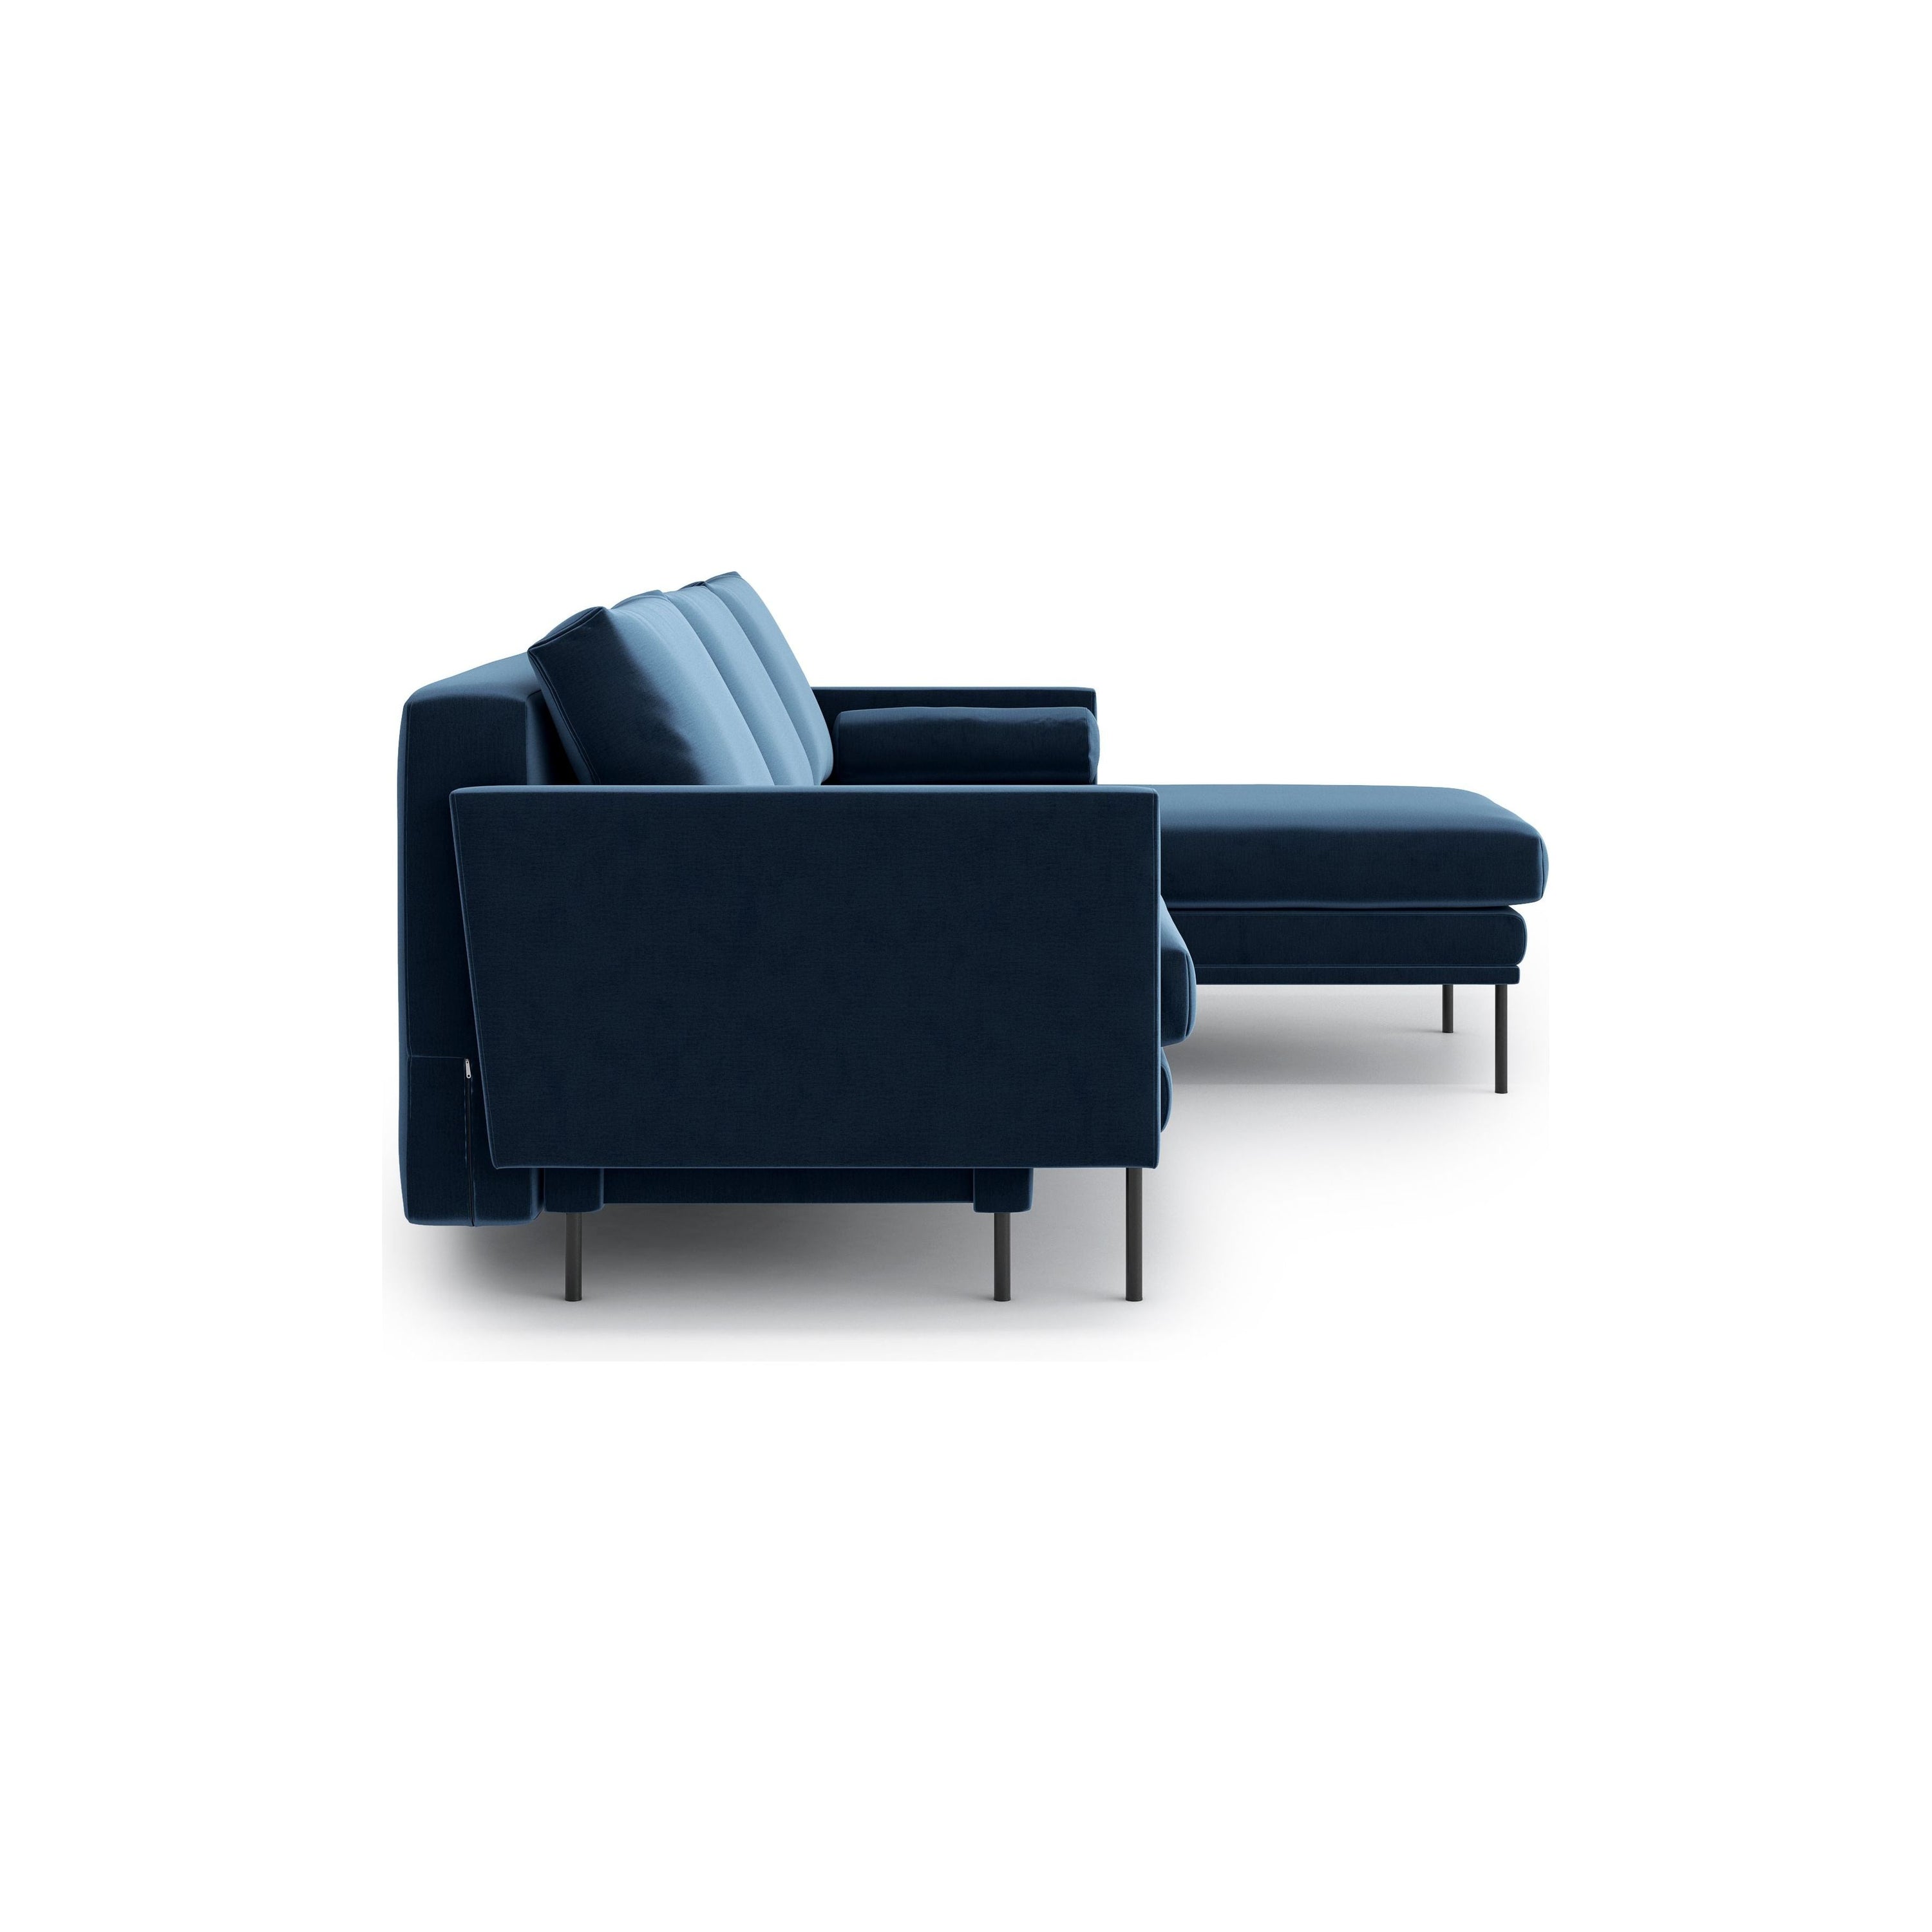 BLUES kampinė sofa lova, mėlyna spalva, universali kampo pusė